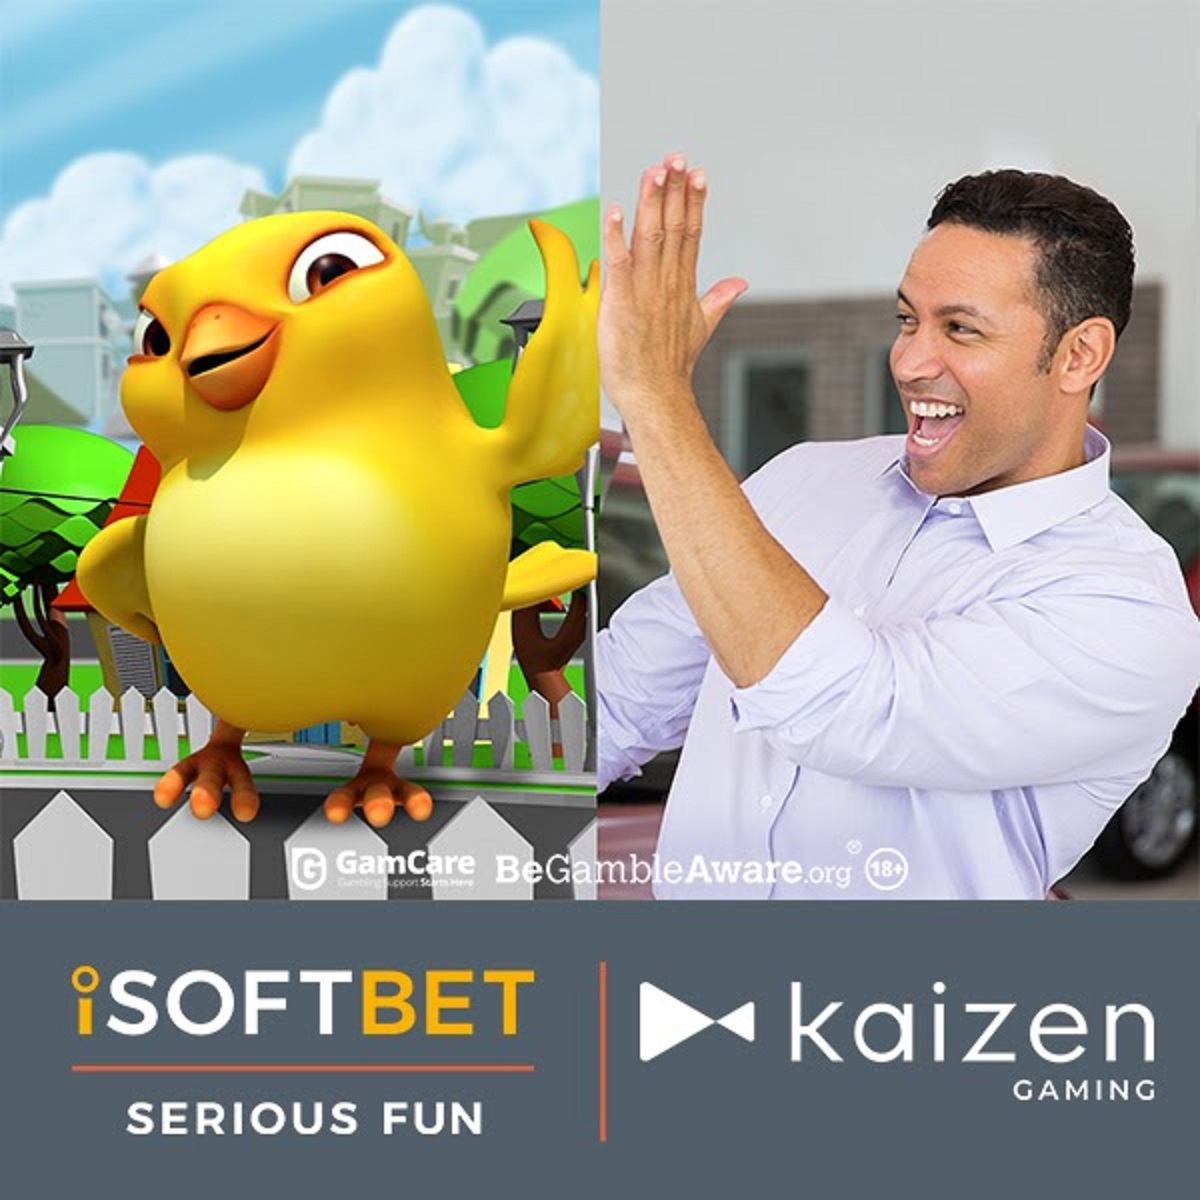 iSoftBet expands Kaizen Gaming partnership to Bulgaria